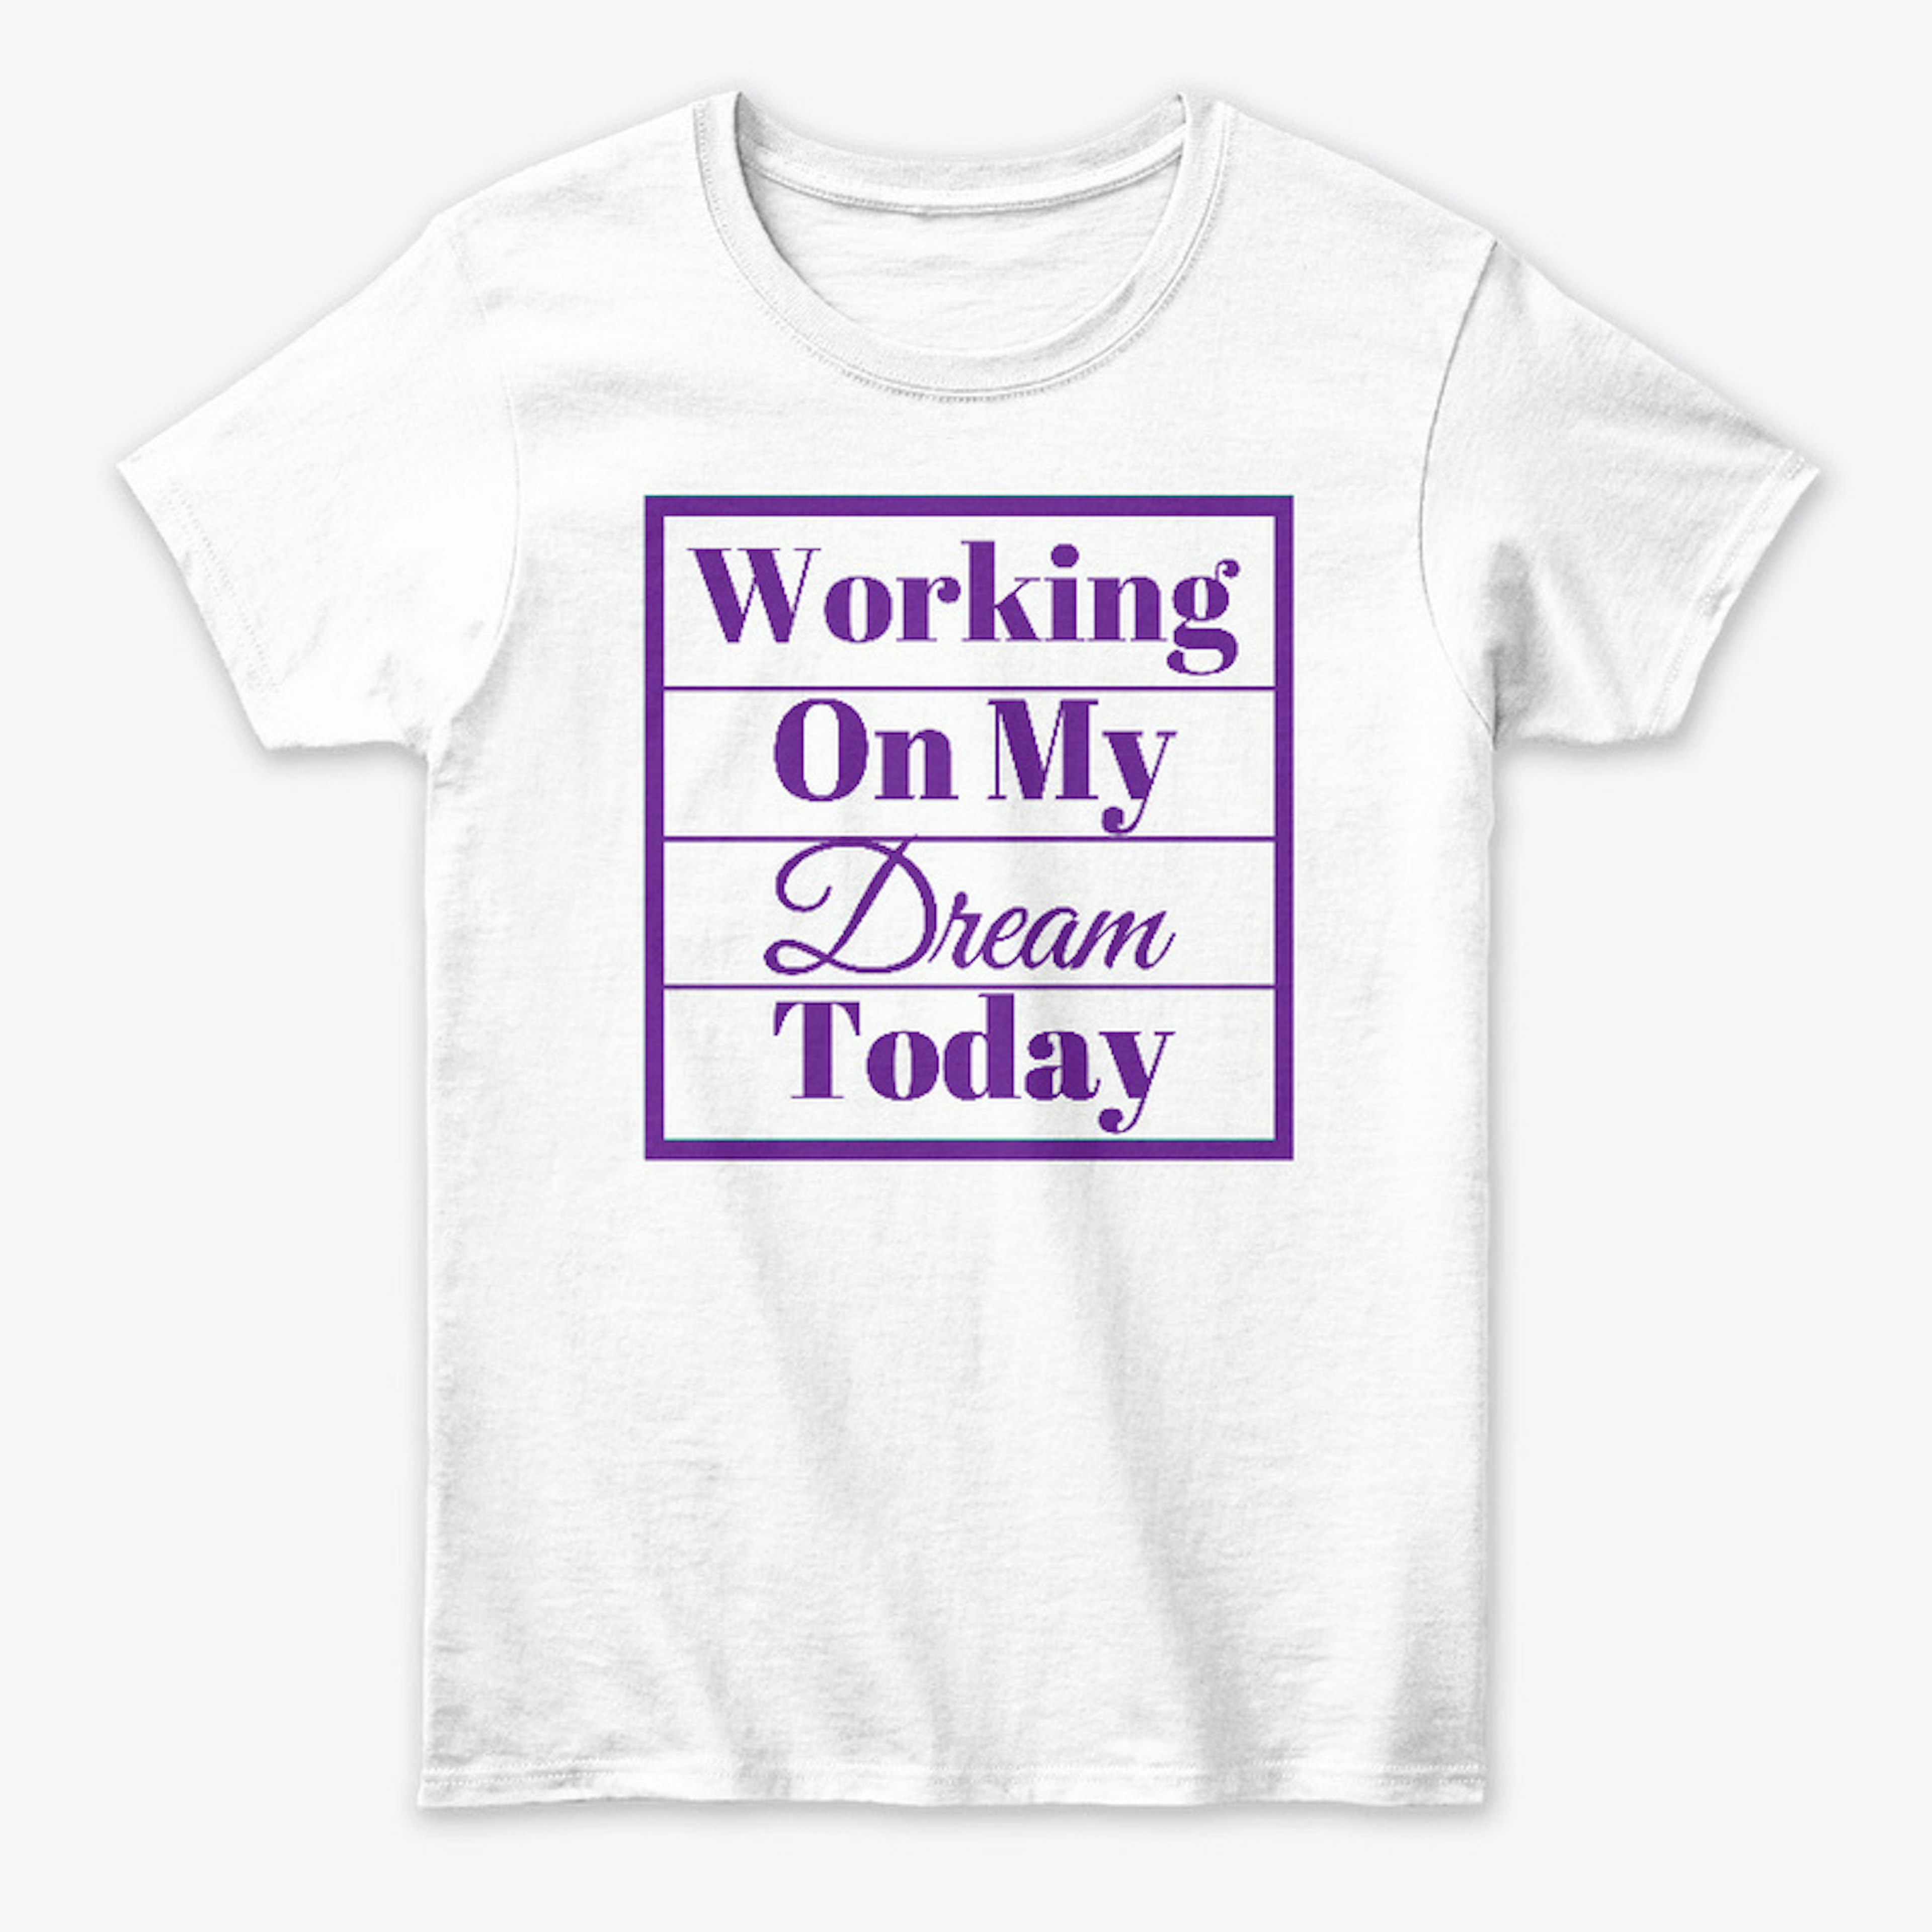 Working On My Dream - 2019